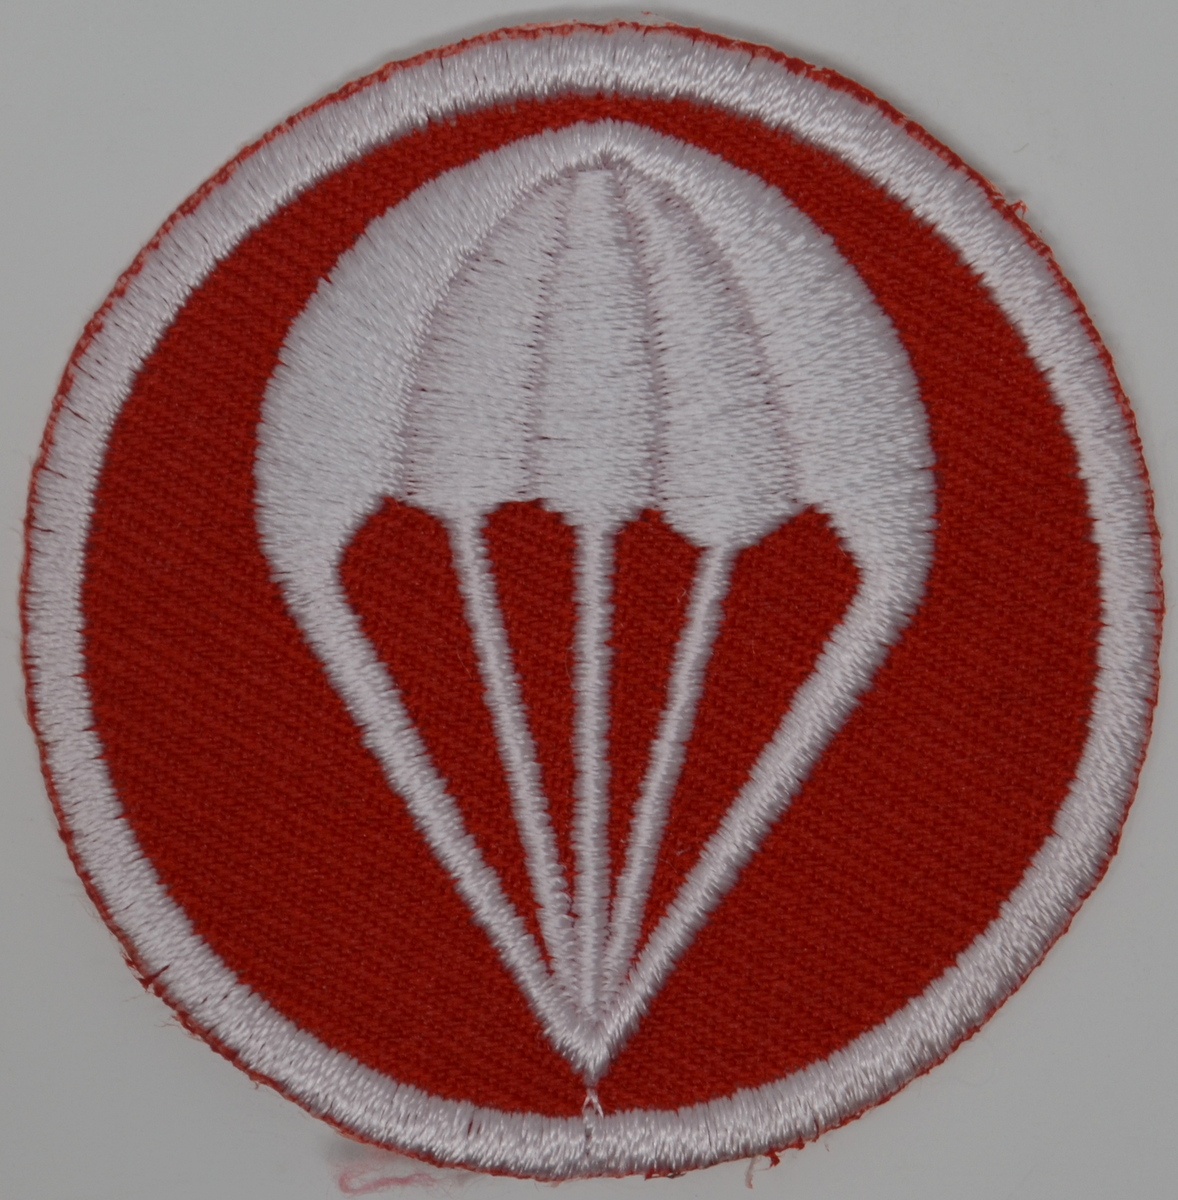 Parachute Artillery Cap Patch: Kelleys Military